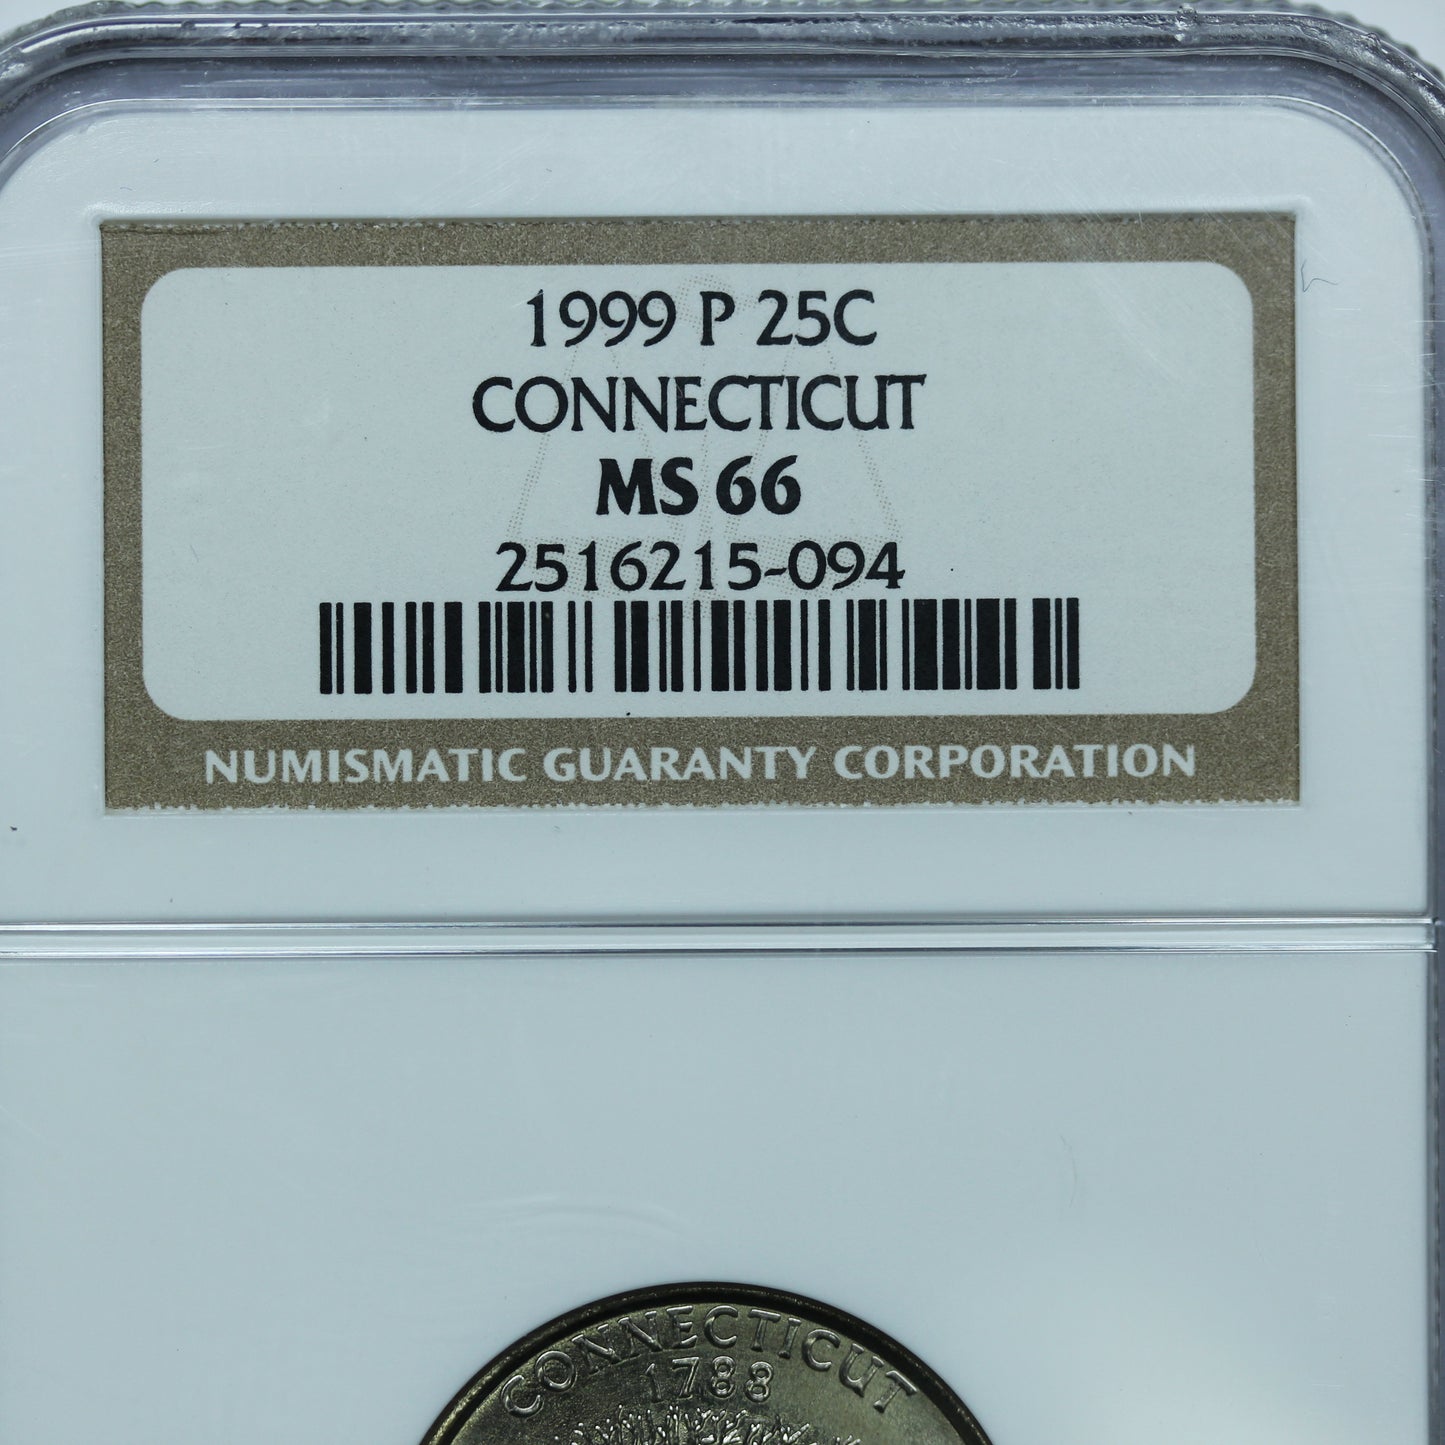 1999 P 25c Connecticut Quarter - NGC MS 66